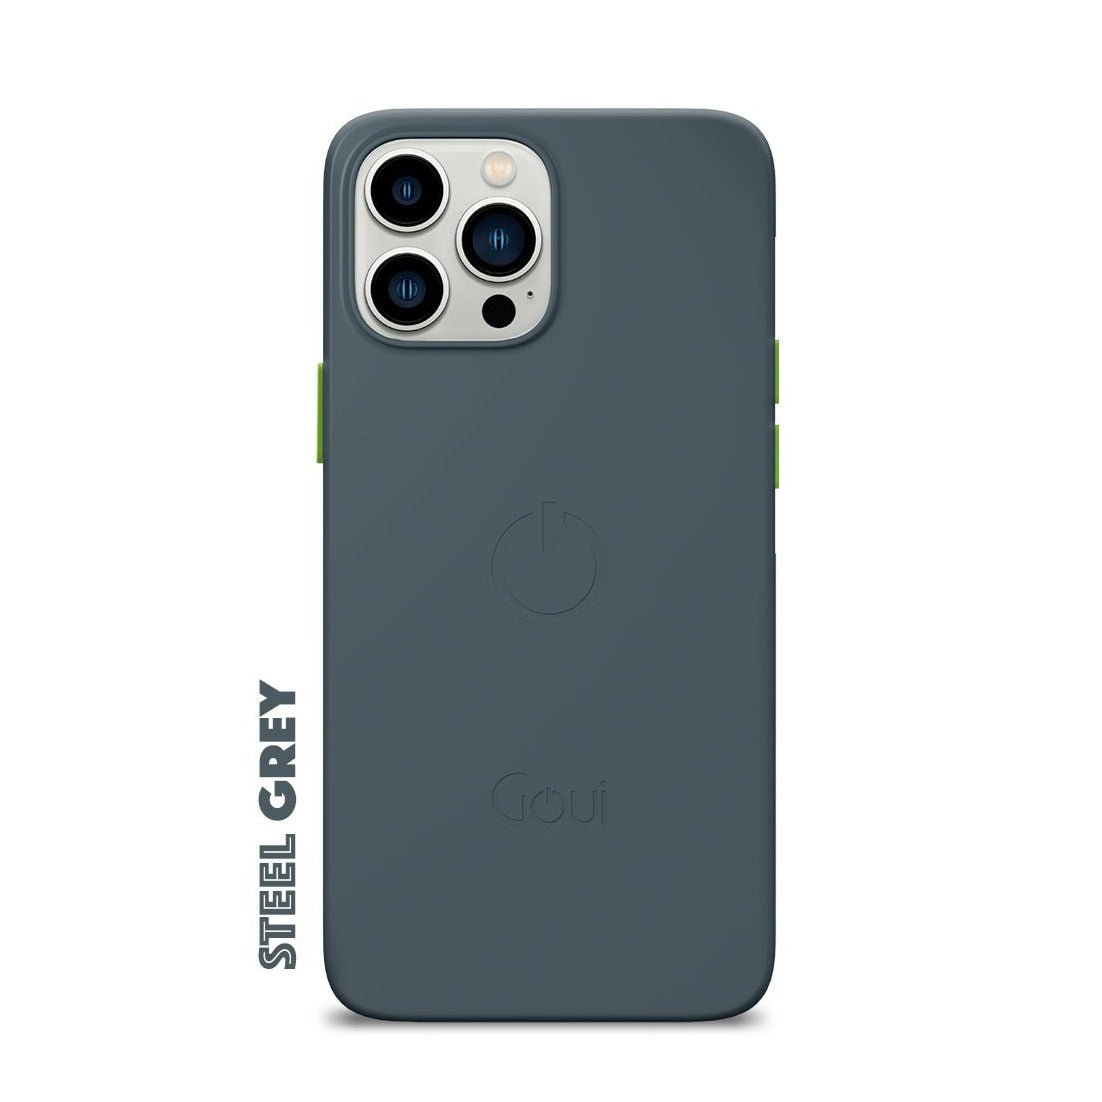 Goui Magnetic Case Iphone - Grey